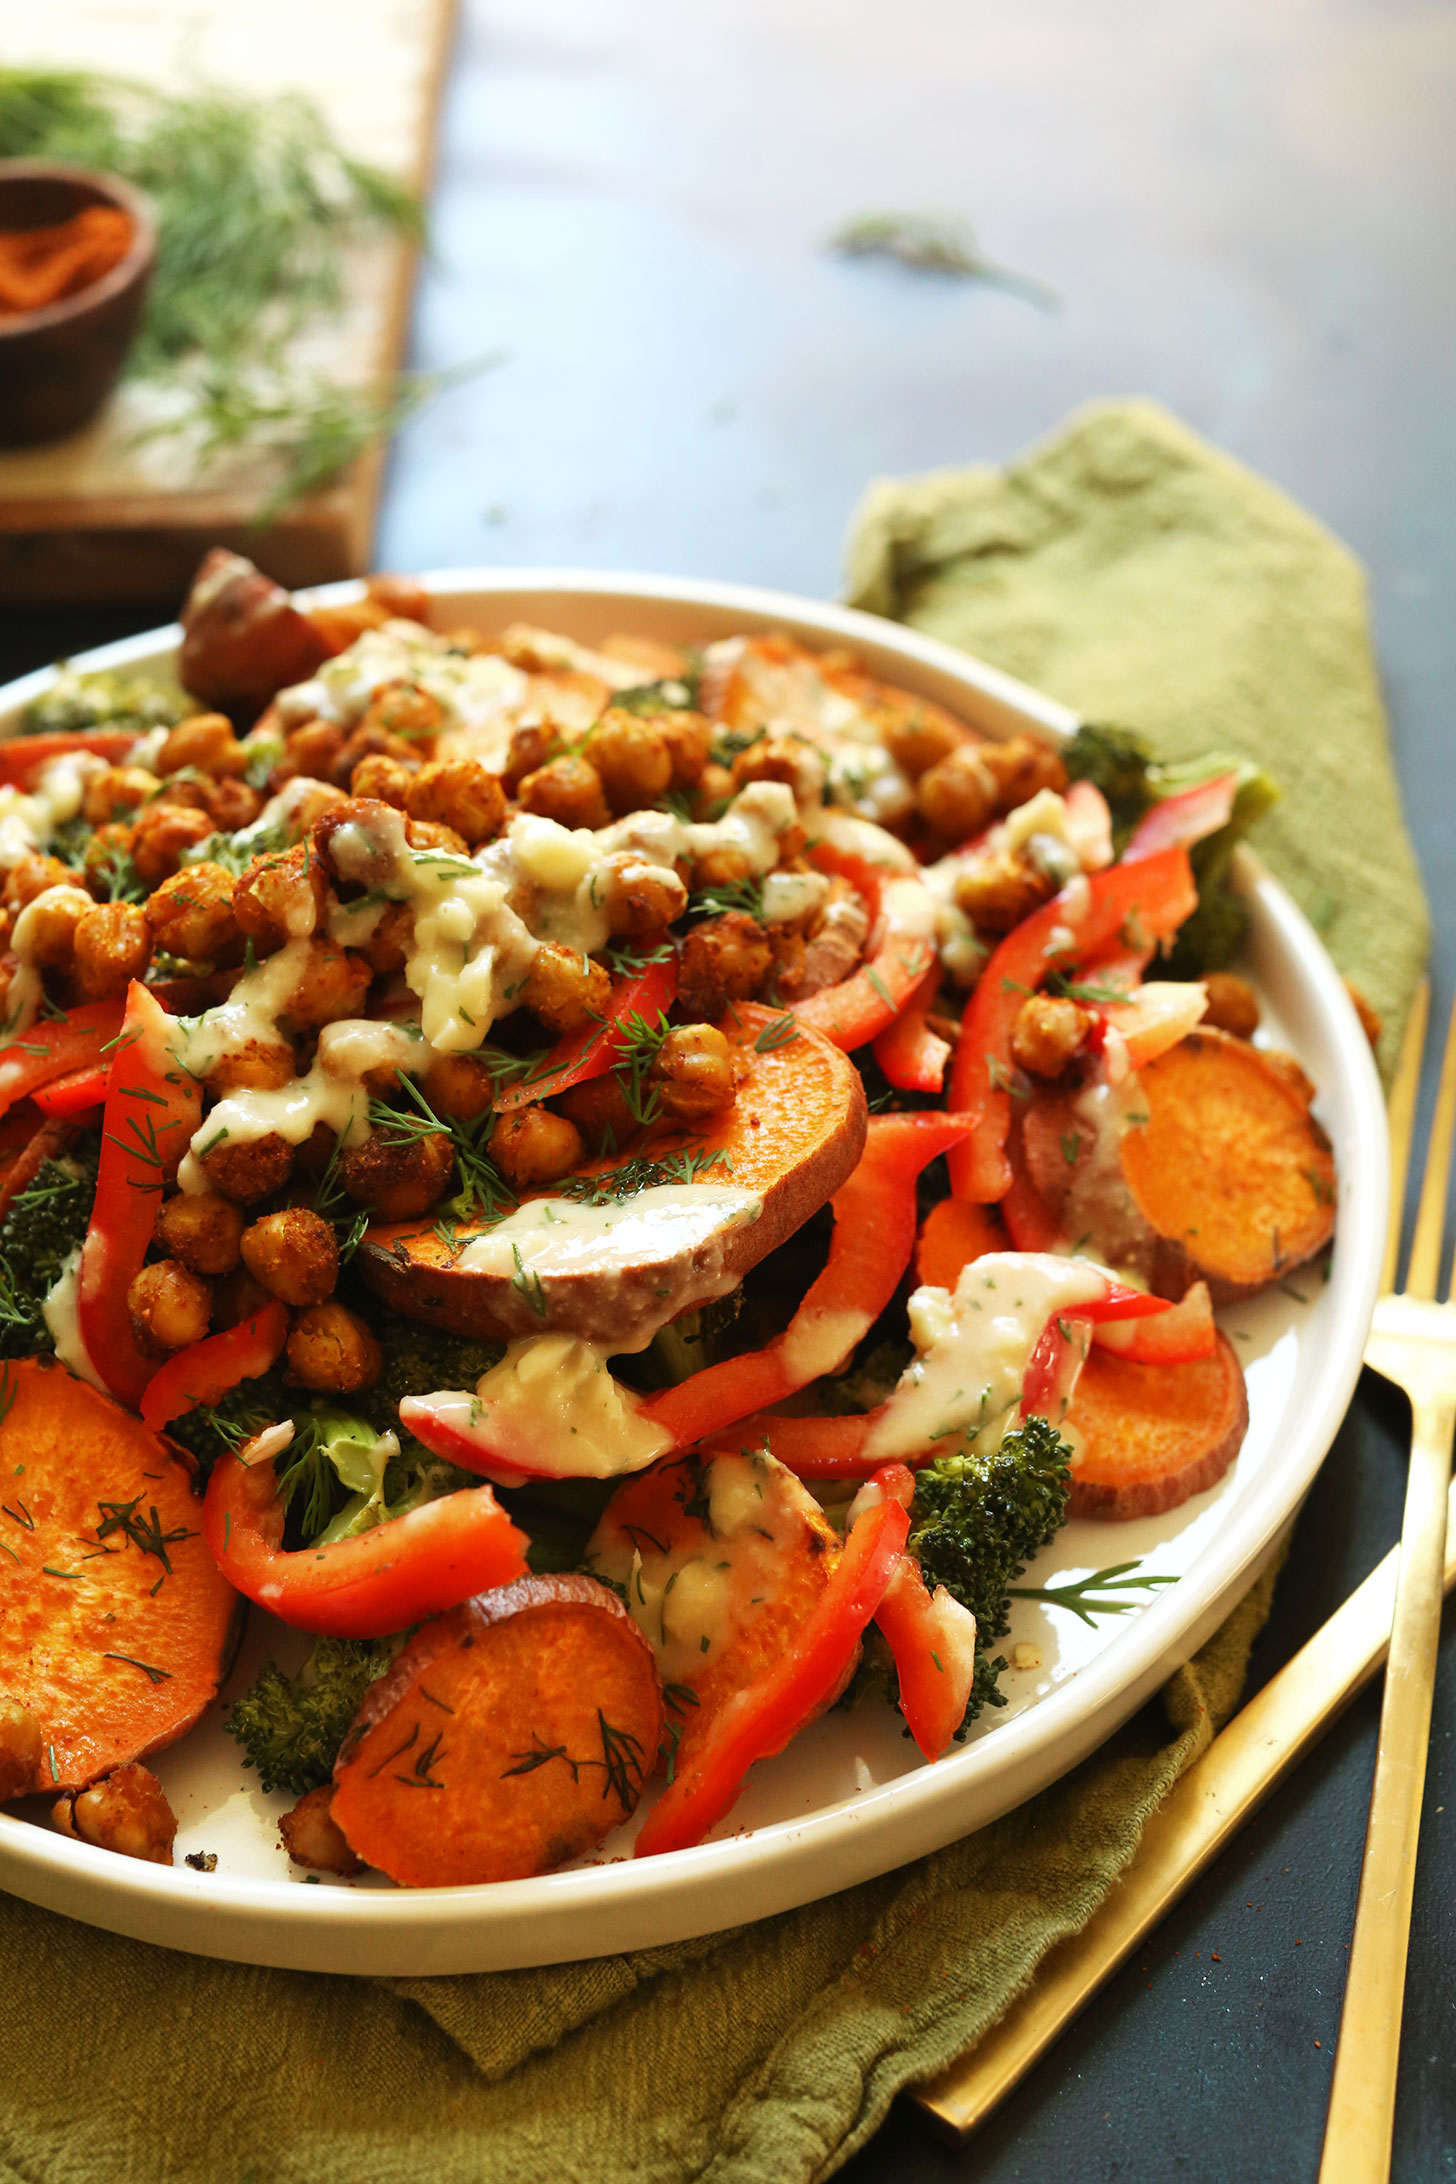 HEALTHY-30-minute-Broccoli-Sweet-Potato-Chickpea-Salad-with-a-simple-Garlicl-Dill-Sauce-vegan-glutenfree-dinner-recipe-minimalistbaker